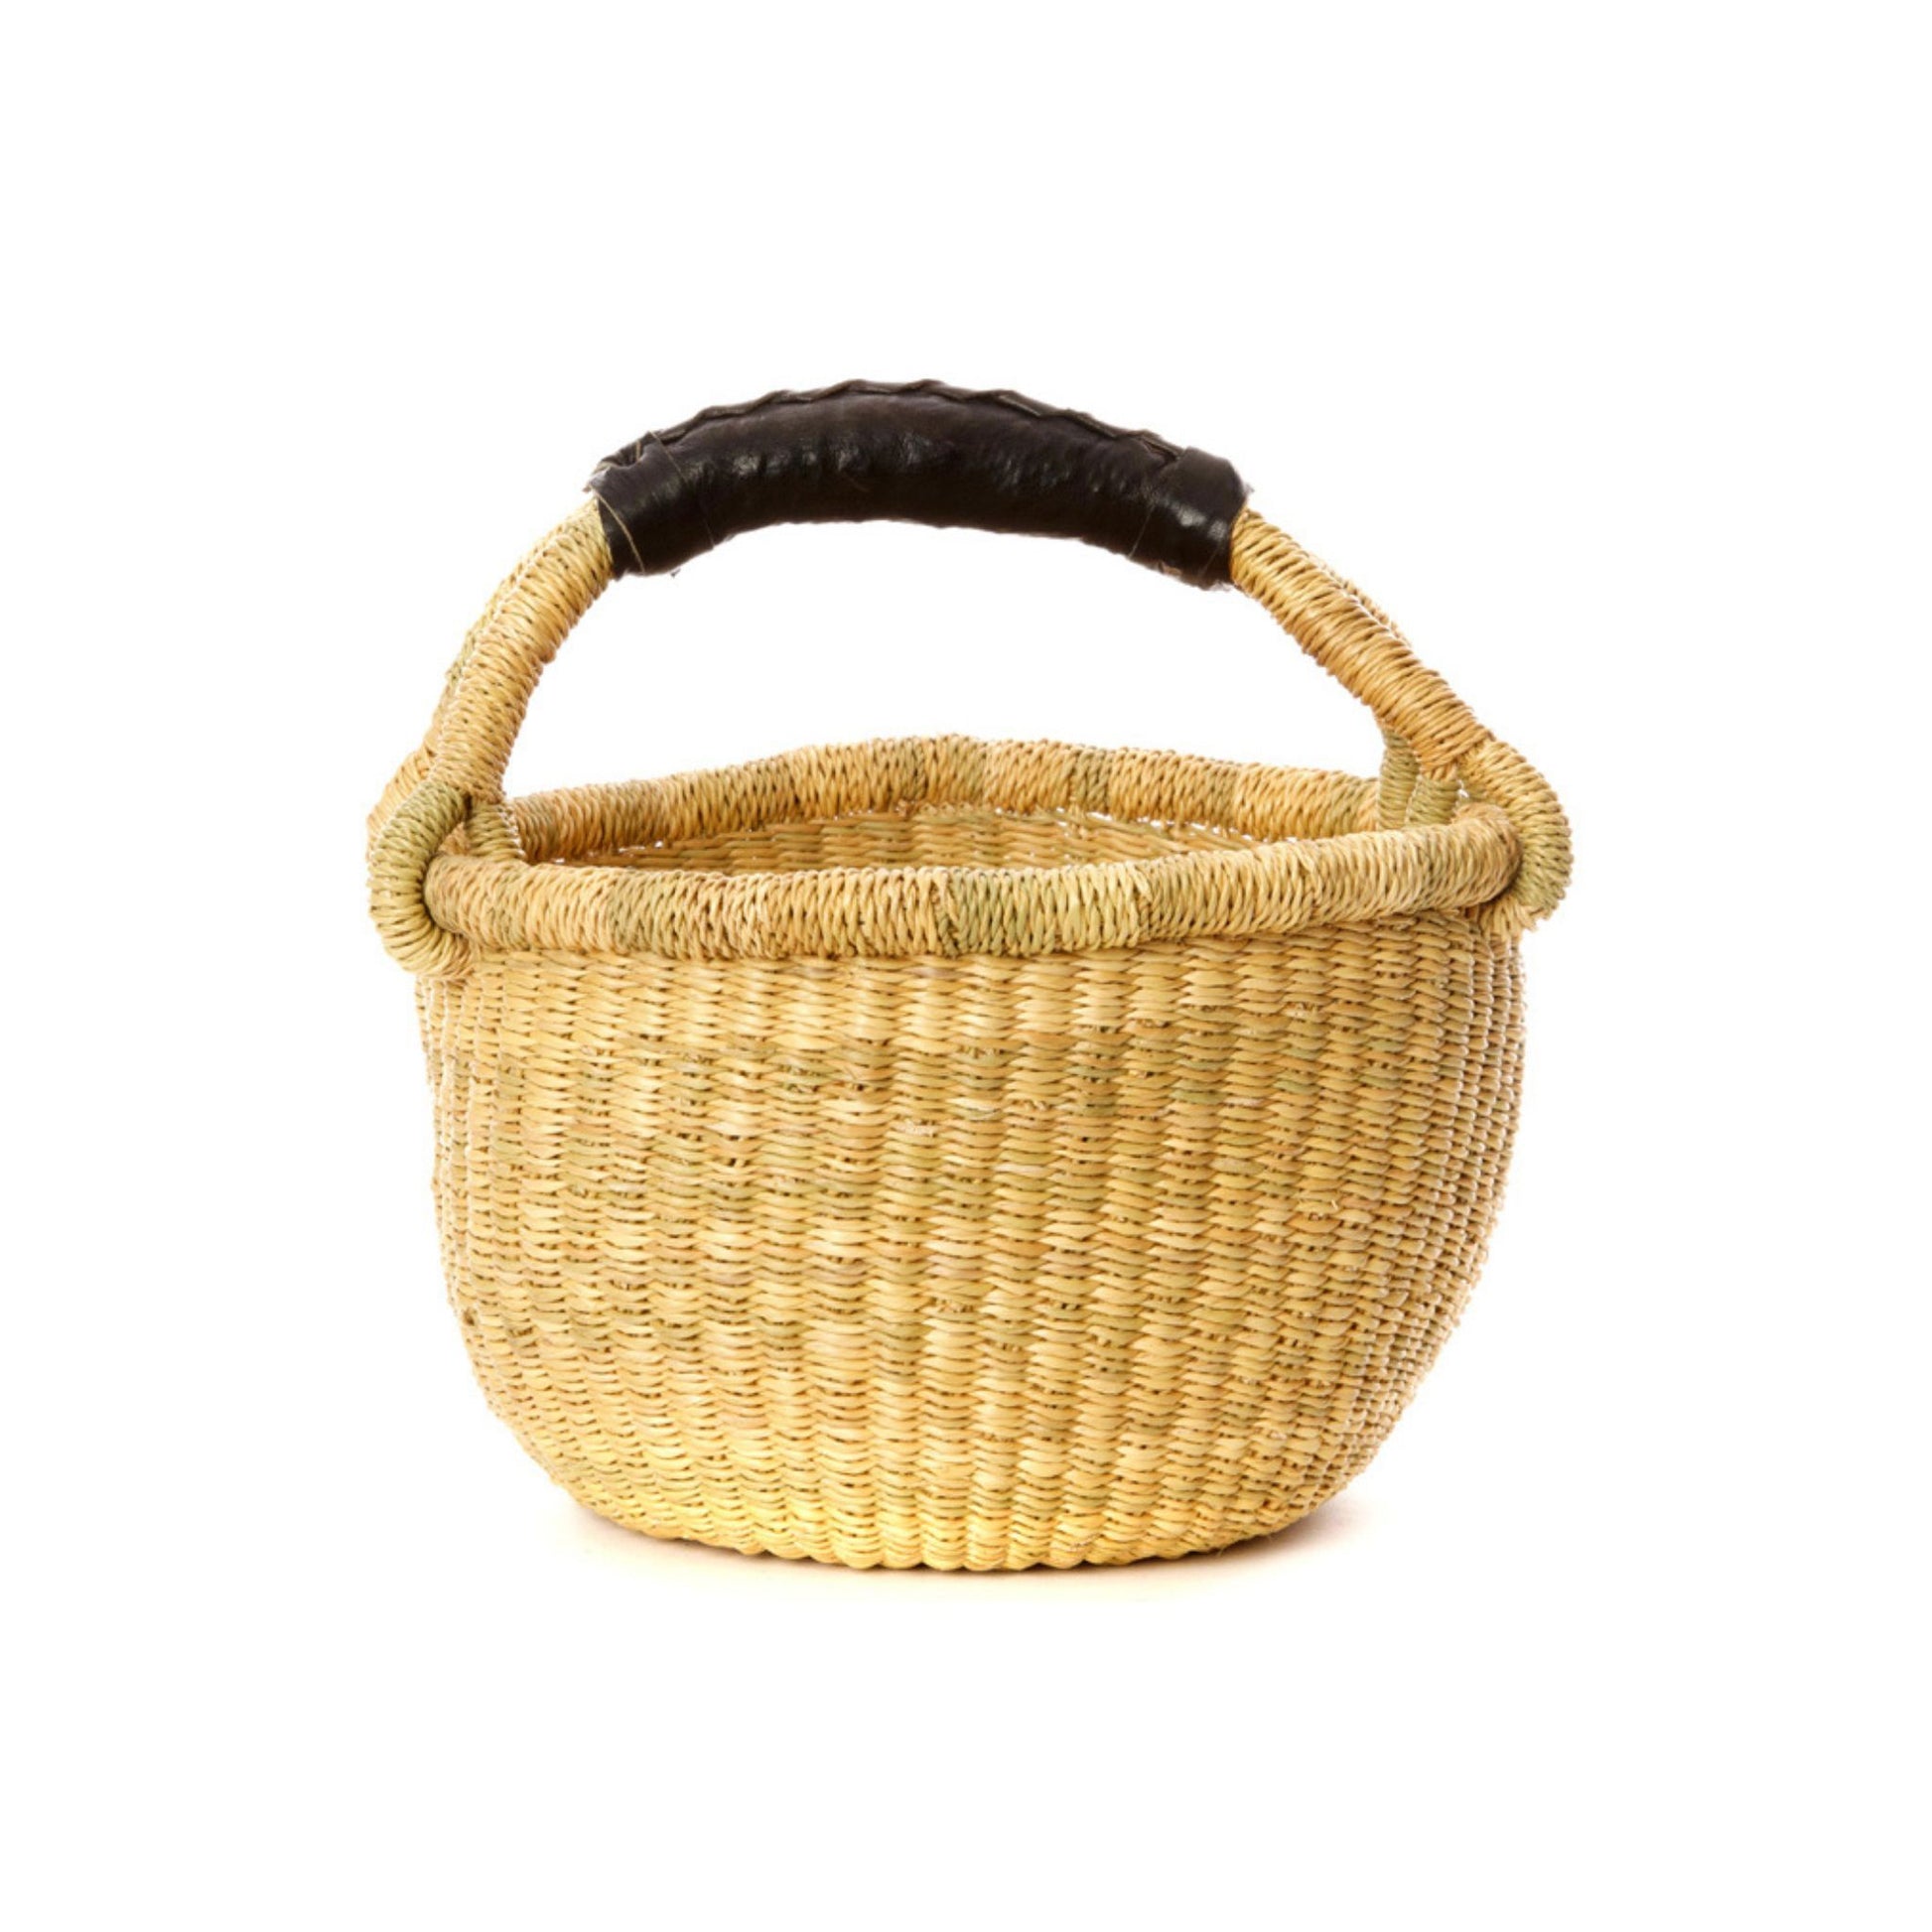 Mini natural bolga basket with black leather handle